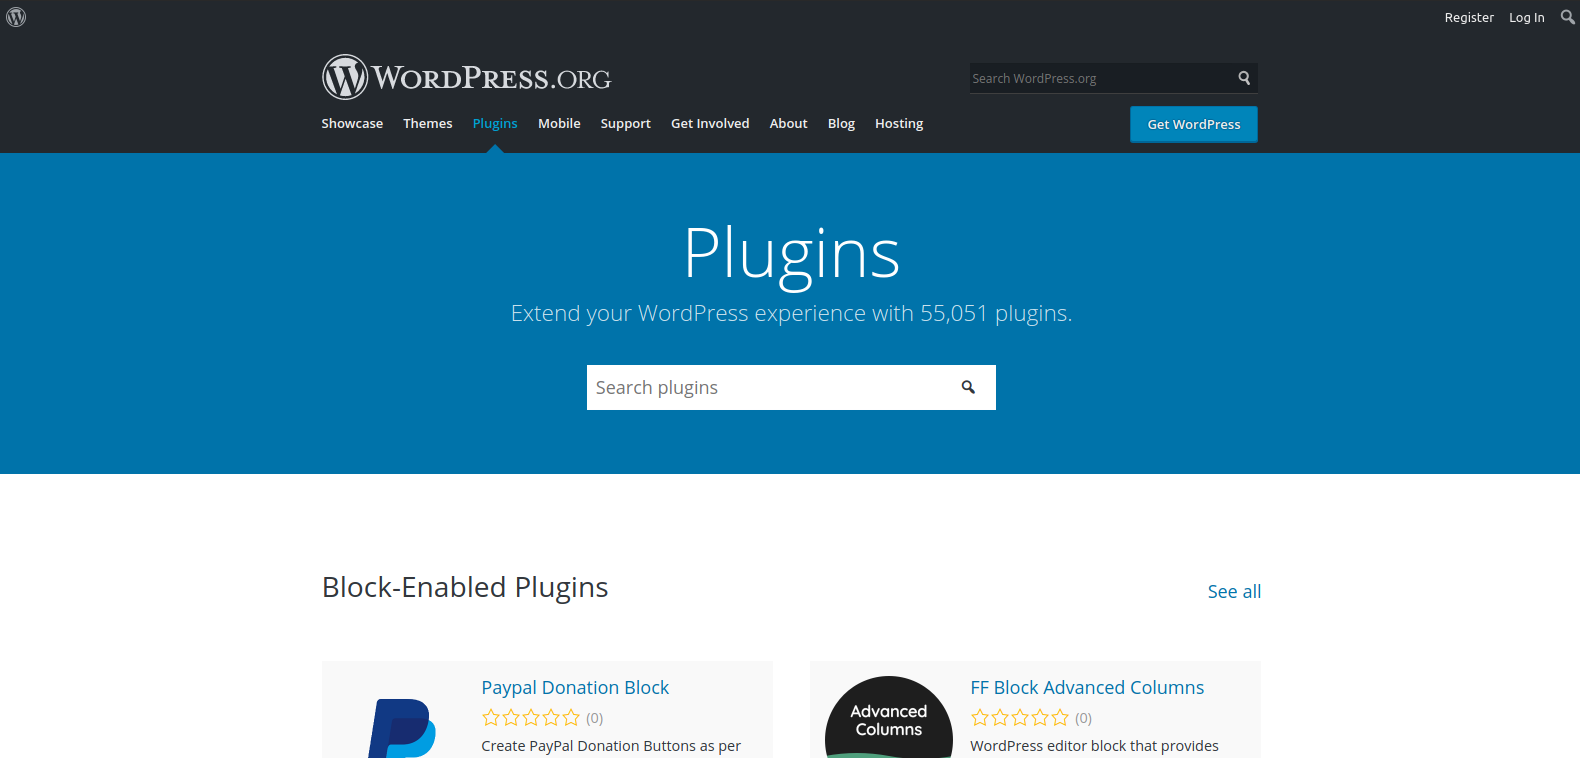 WordPress.org plugins page